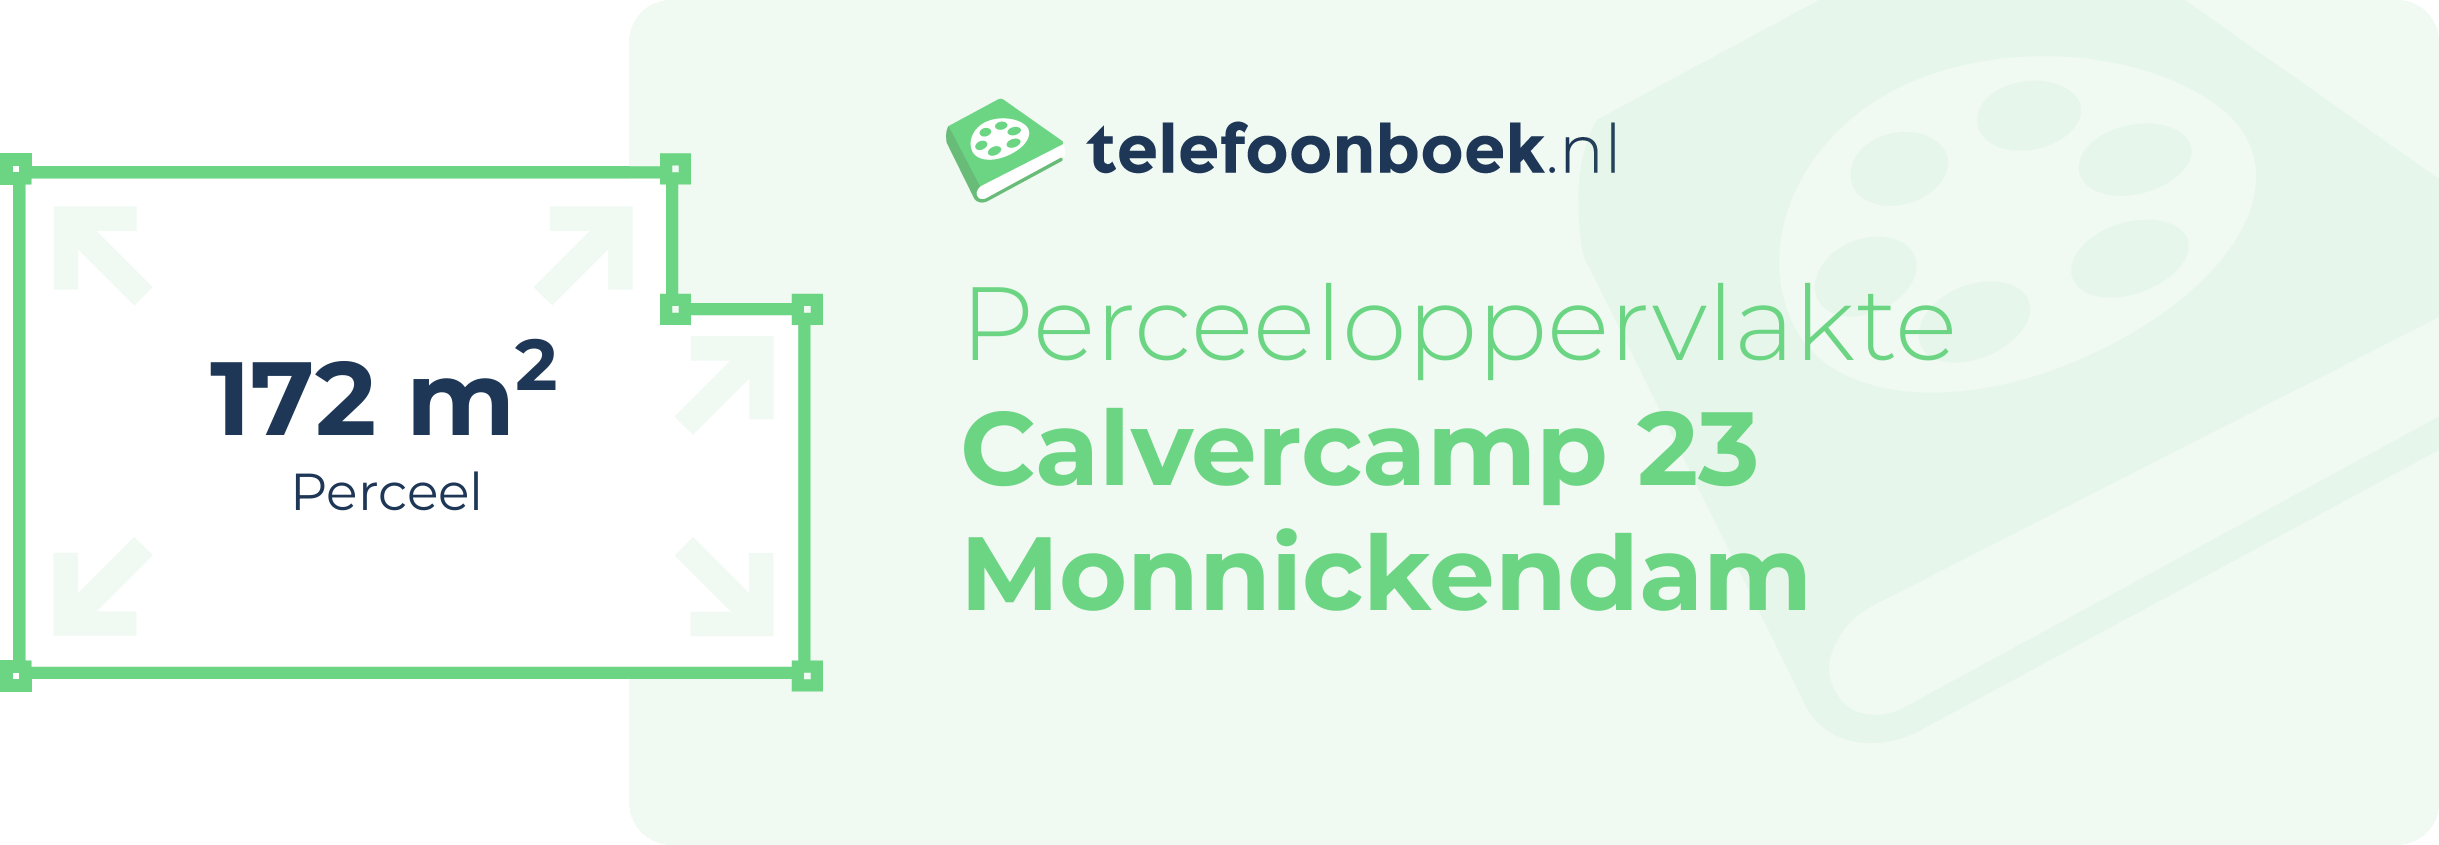 Perceeloppervlakte Calvercamp 23 Monnickendam